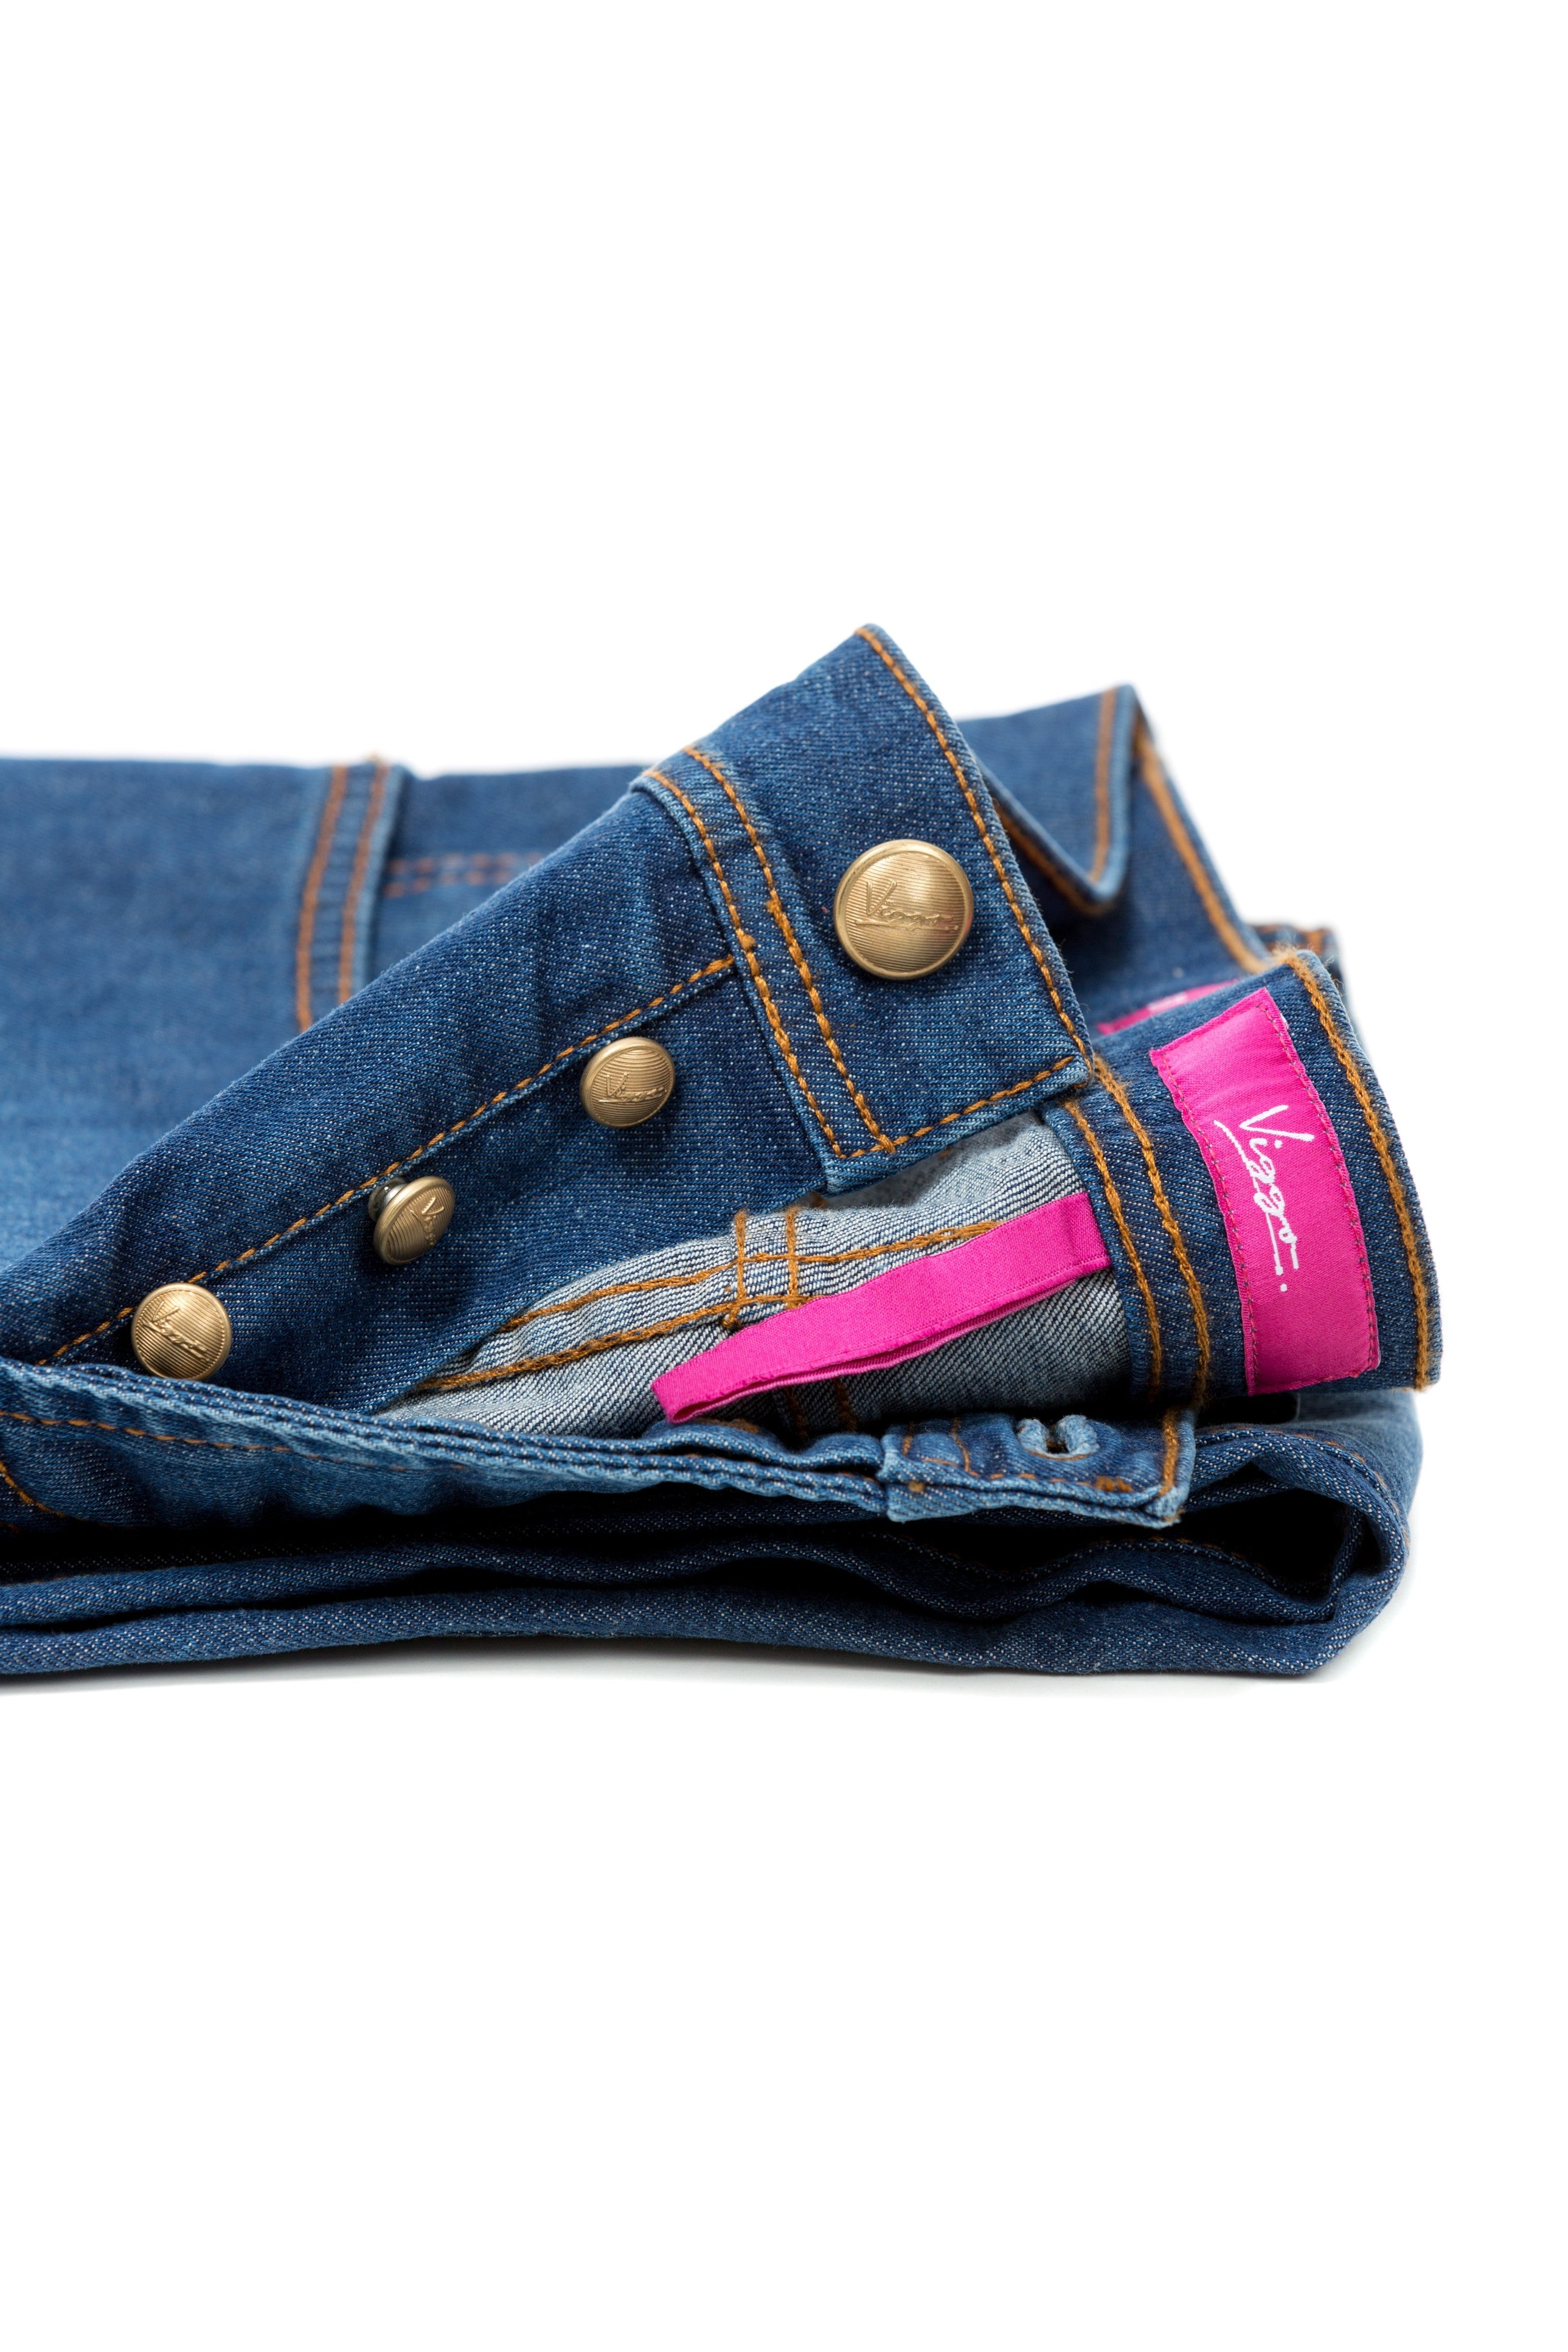 Prewashed Blue Jeans